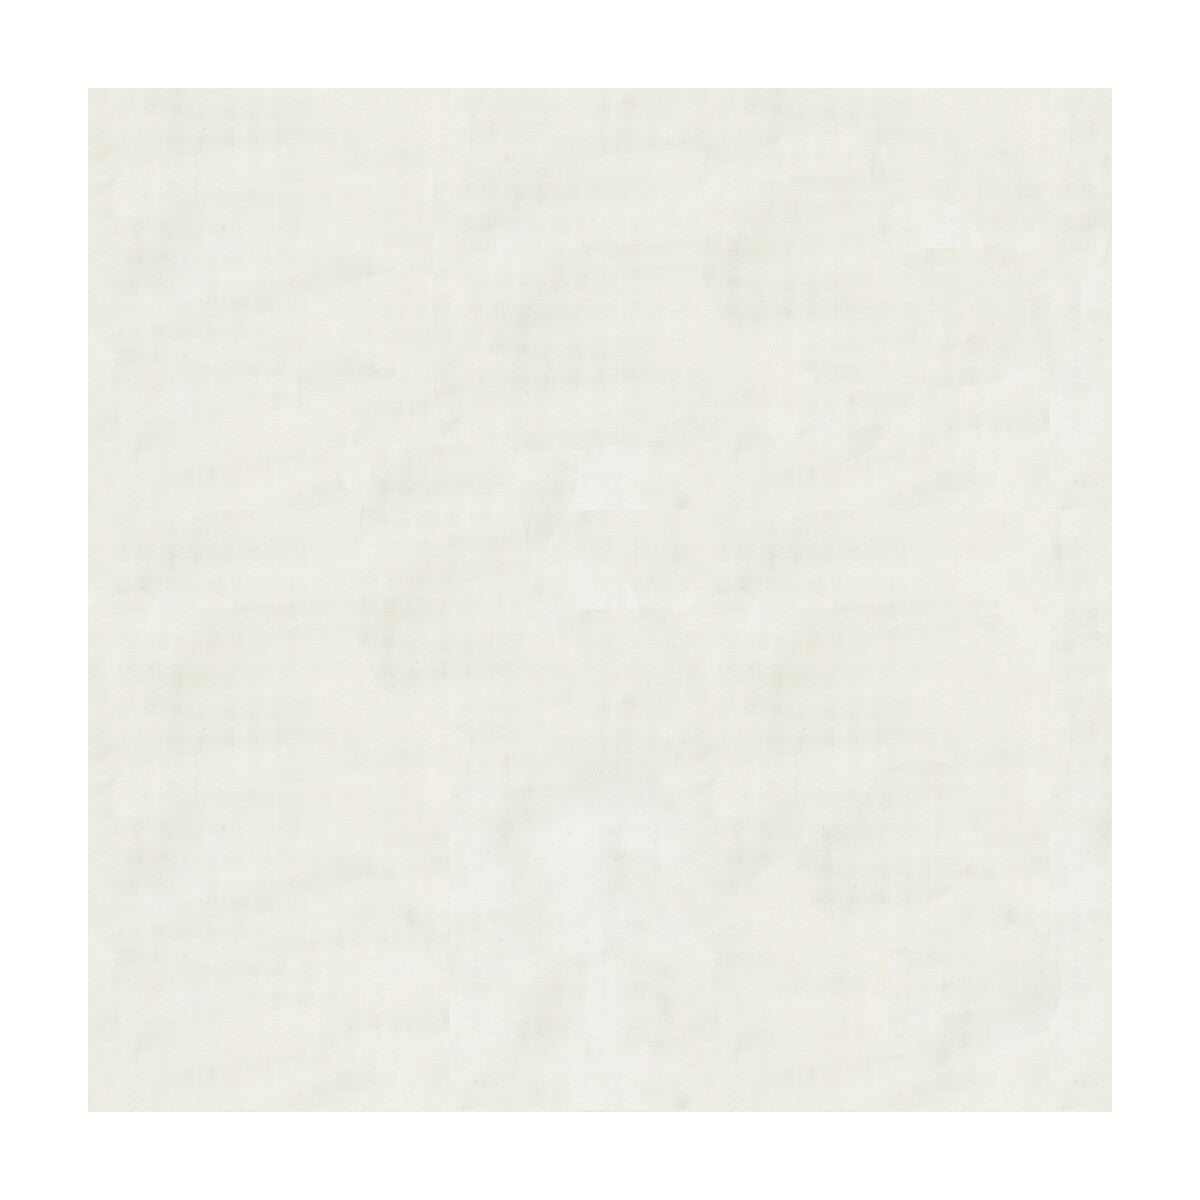 Kravet Basics fabric in 4108-101 color - pattern 4108.101.0 - by Kravet Basics in the Sheer Outlook collection